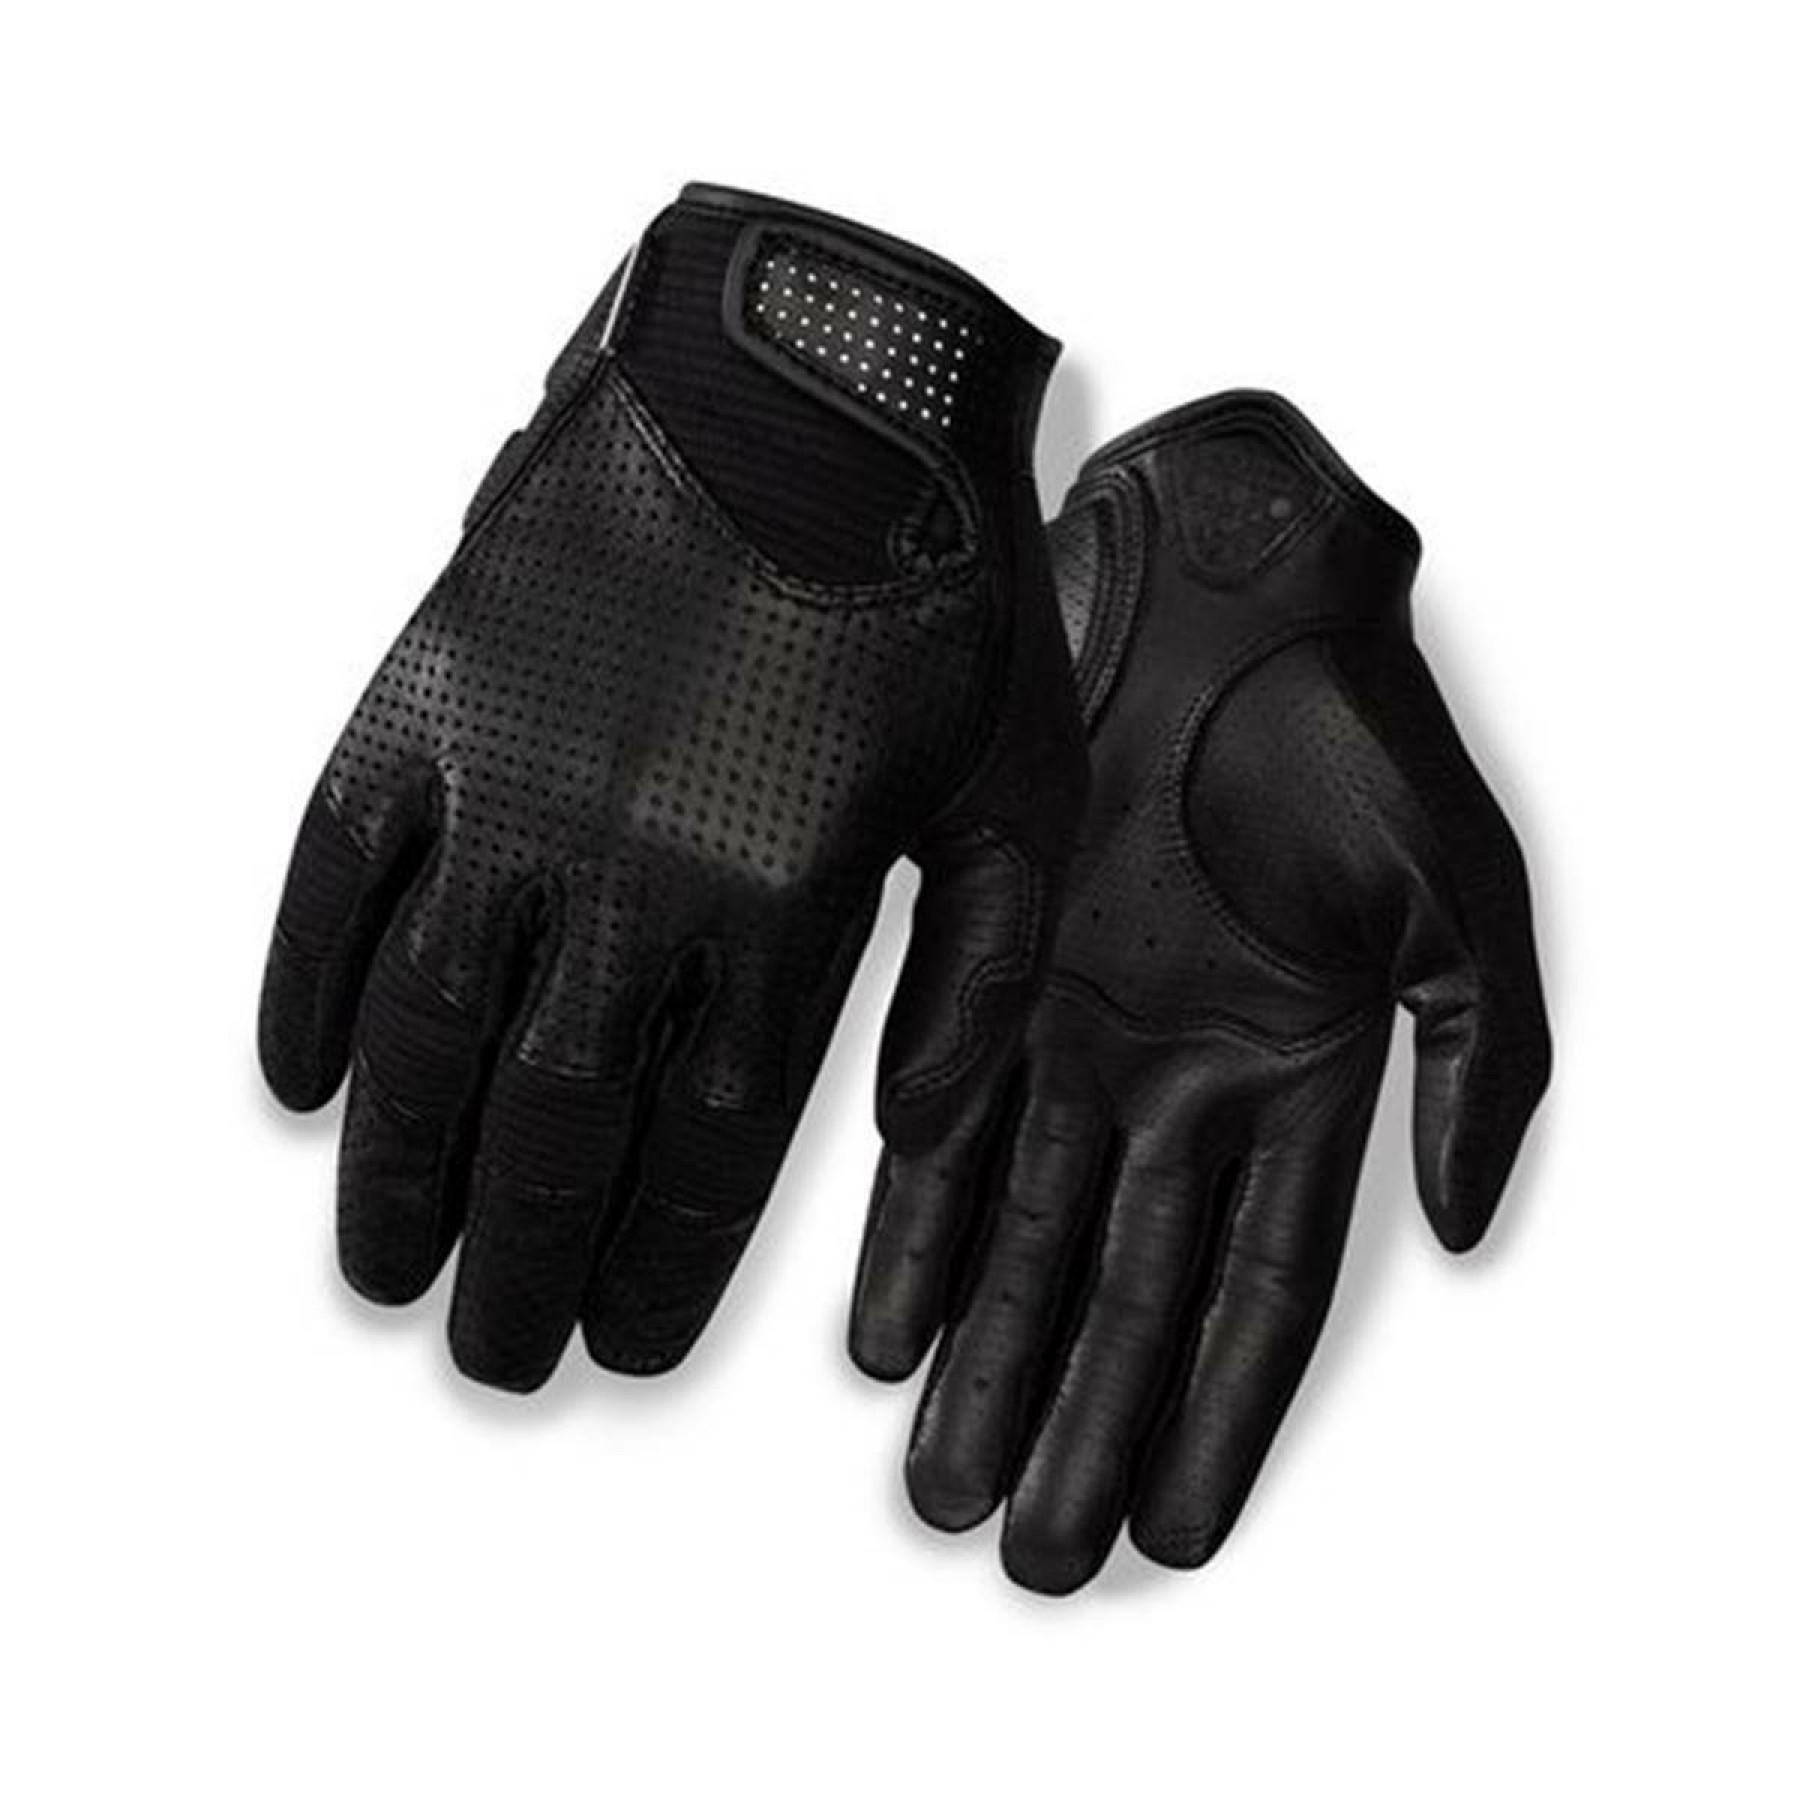 Gloves Giro Lx Lf